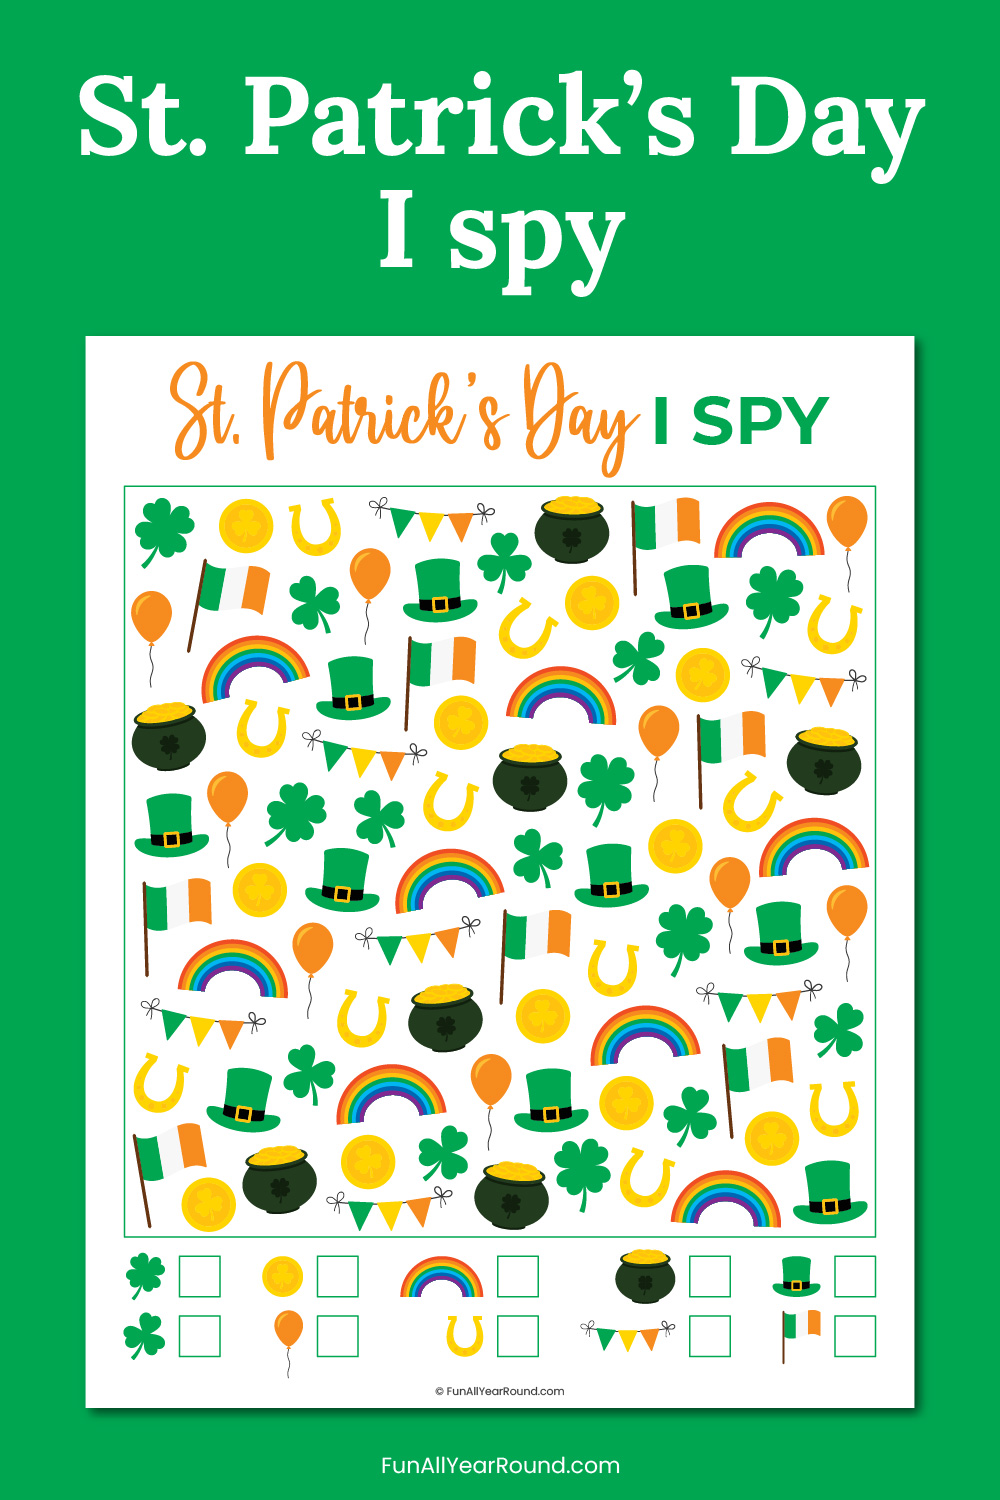 St. Patrick's Day I spy